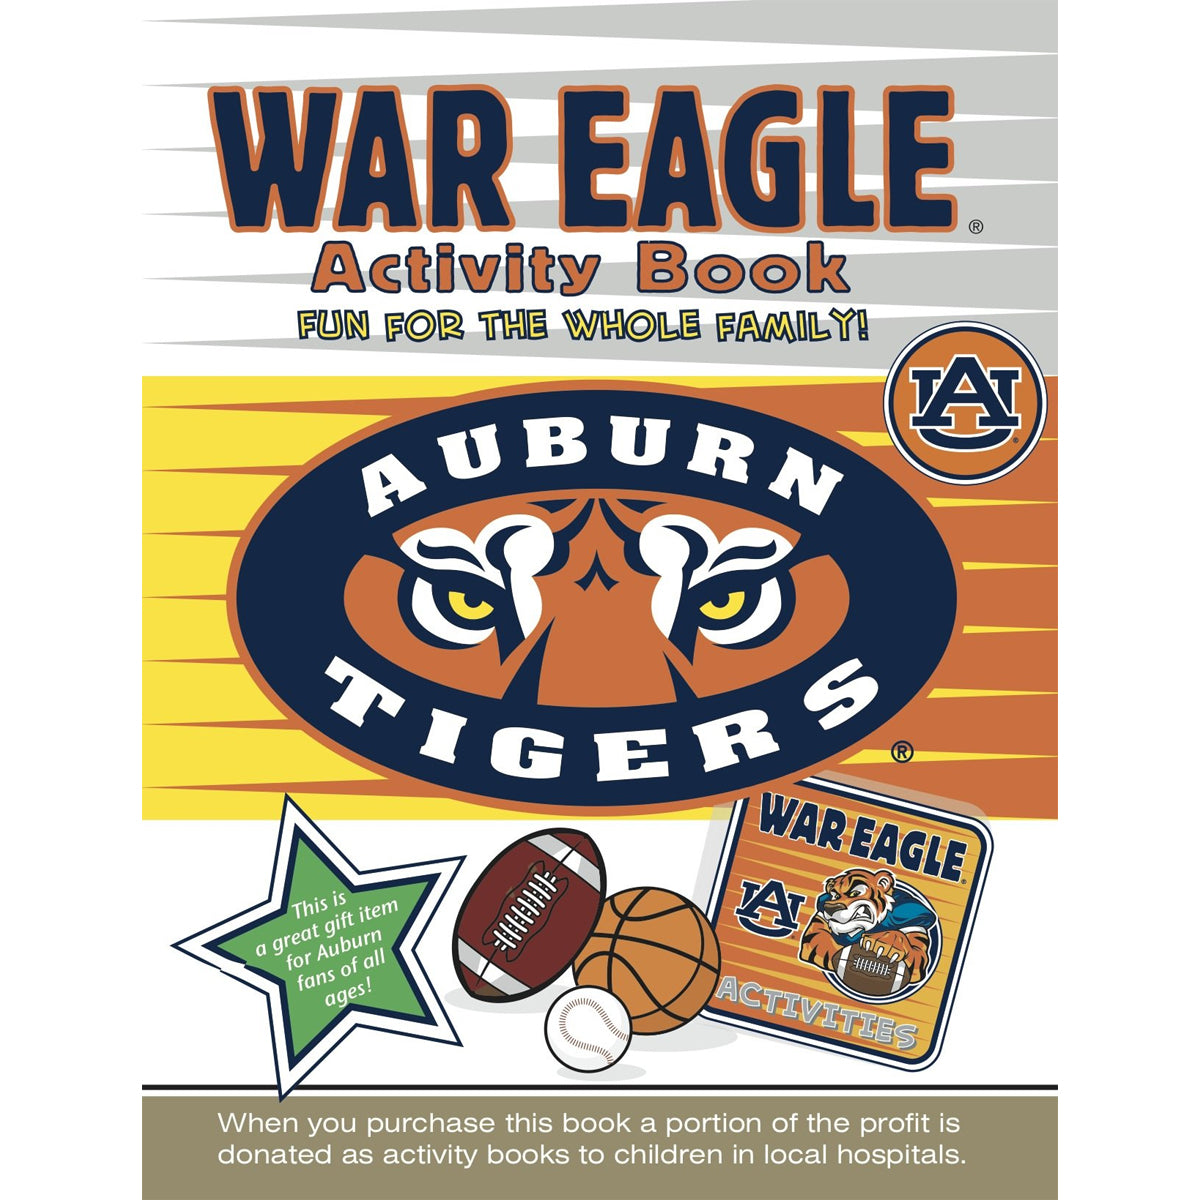 Auburn Activity Book, fun for the Whole Family